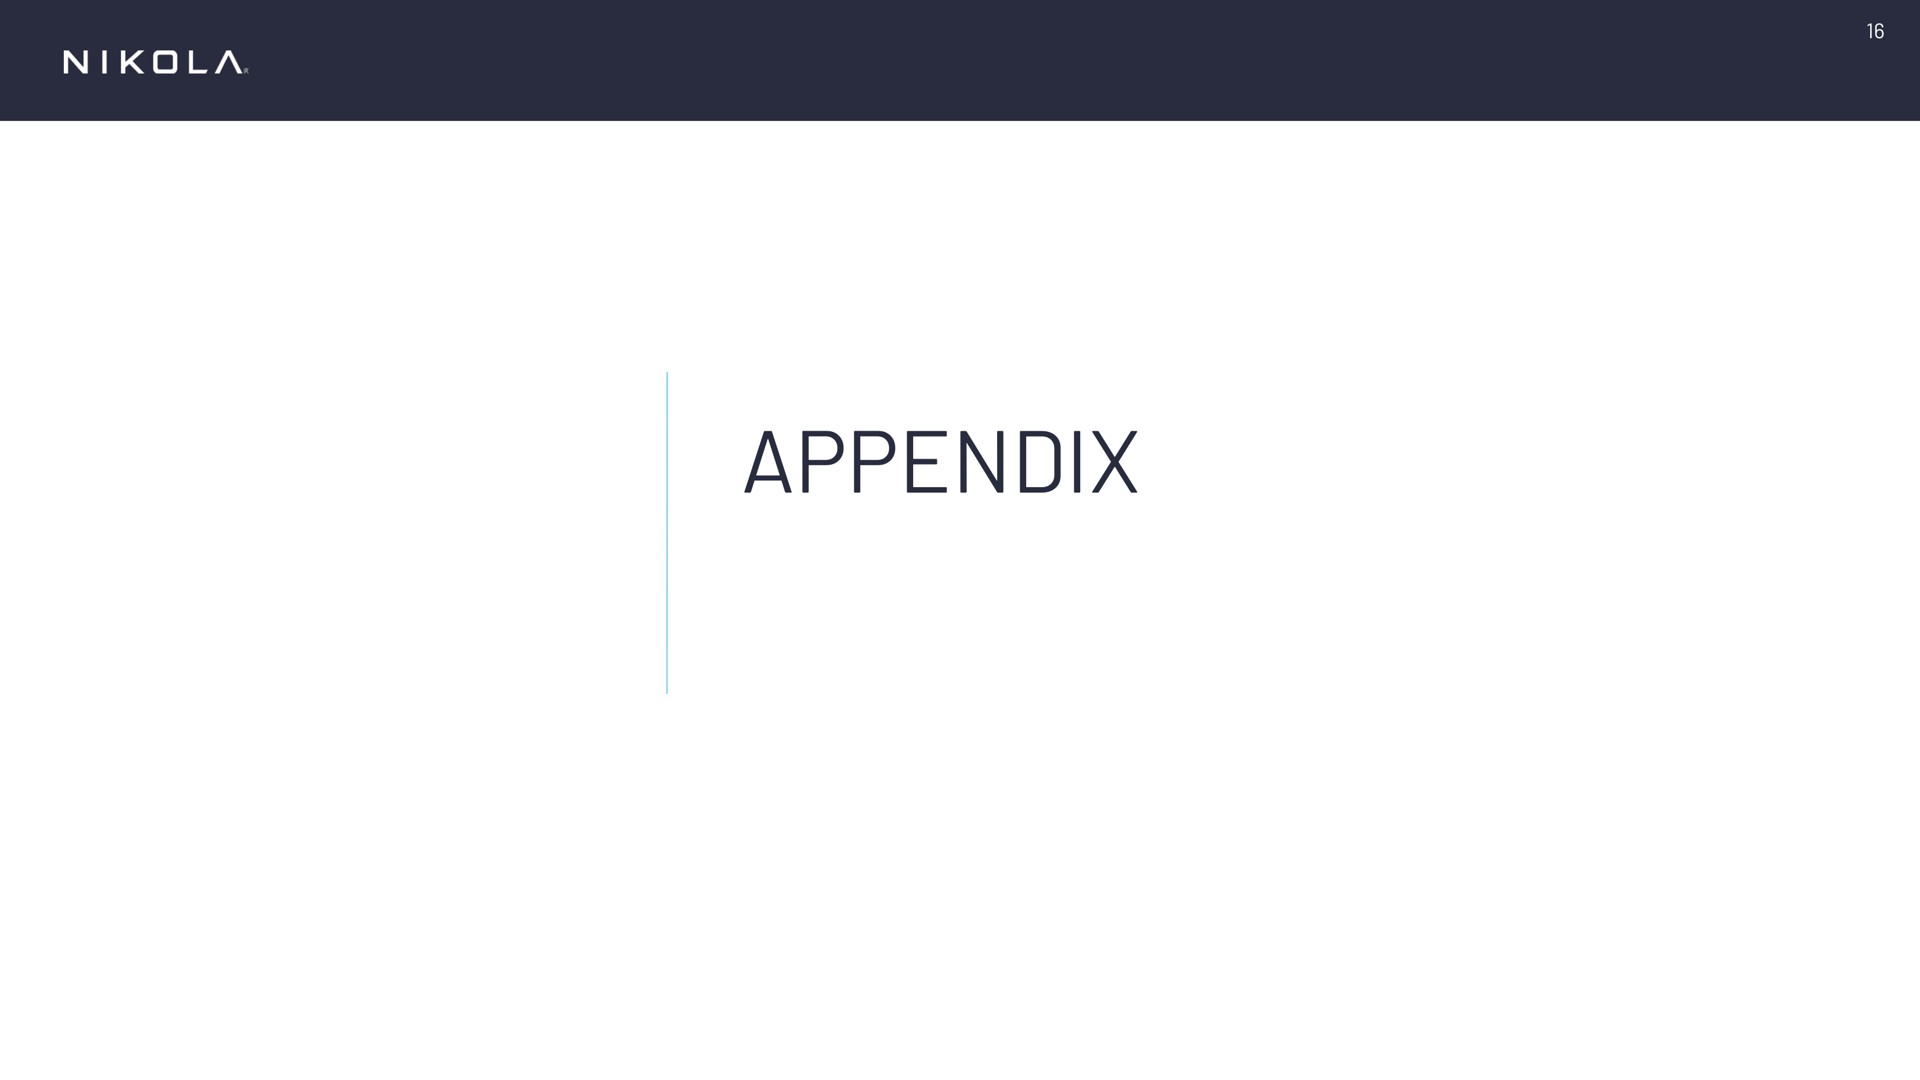 appendix | Nikola